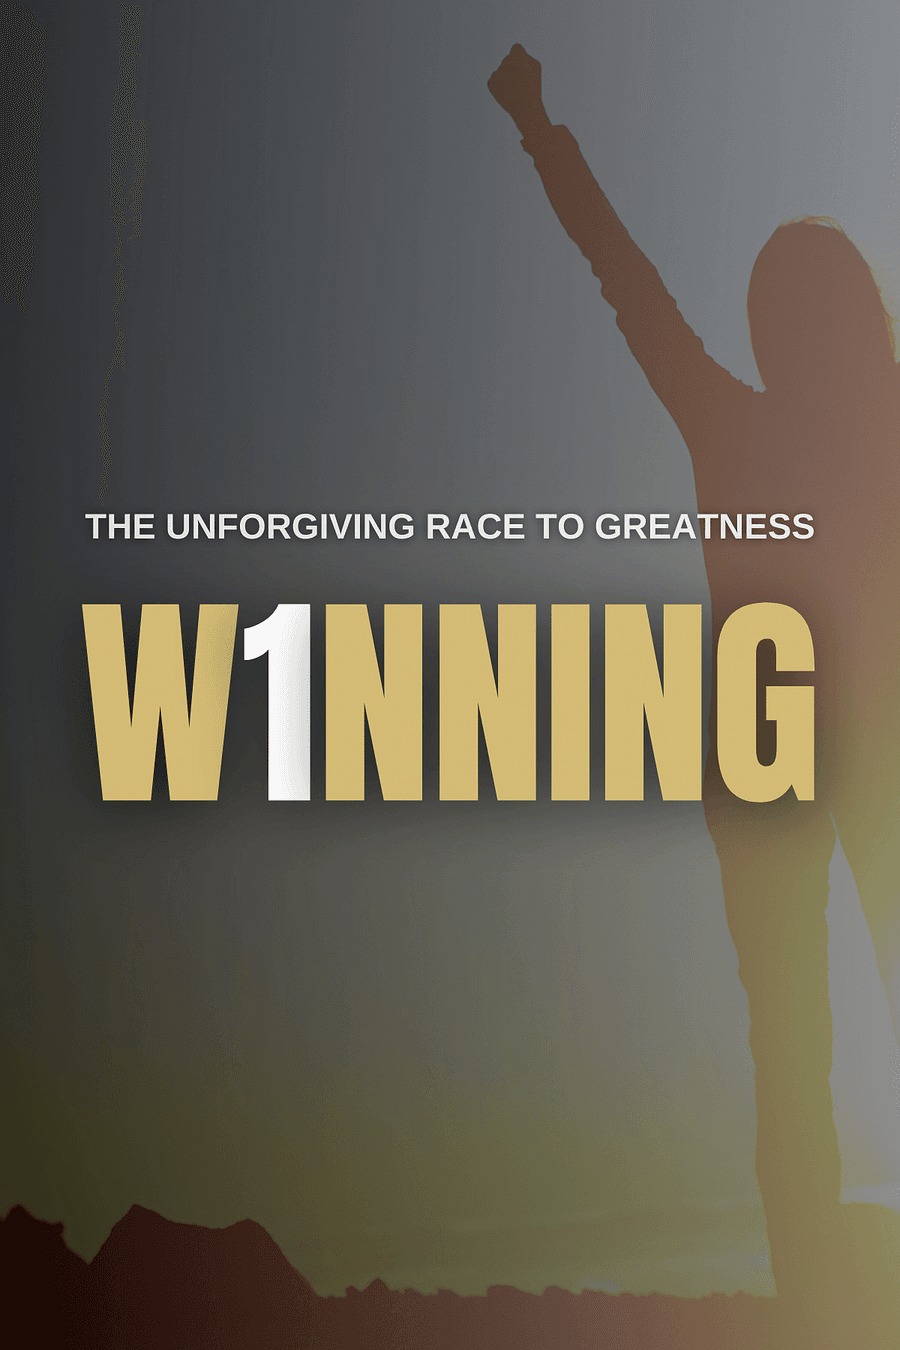 Winning by Tim S. Grover - Book Summary